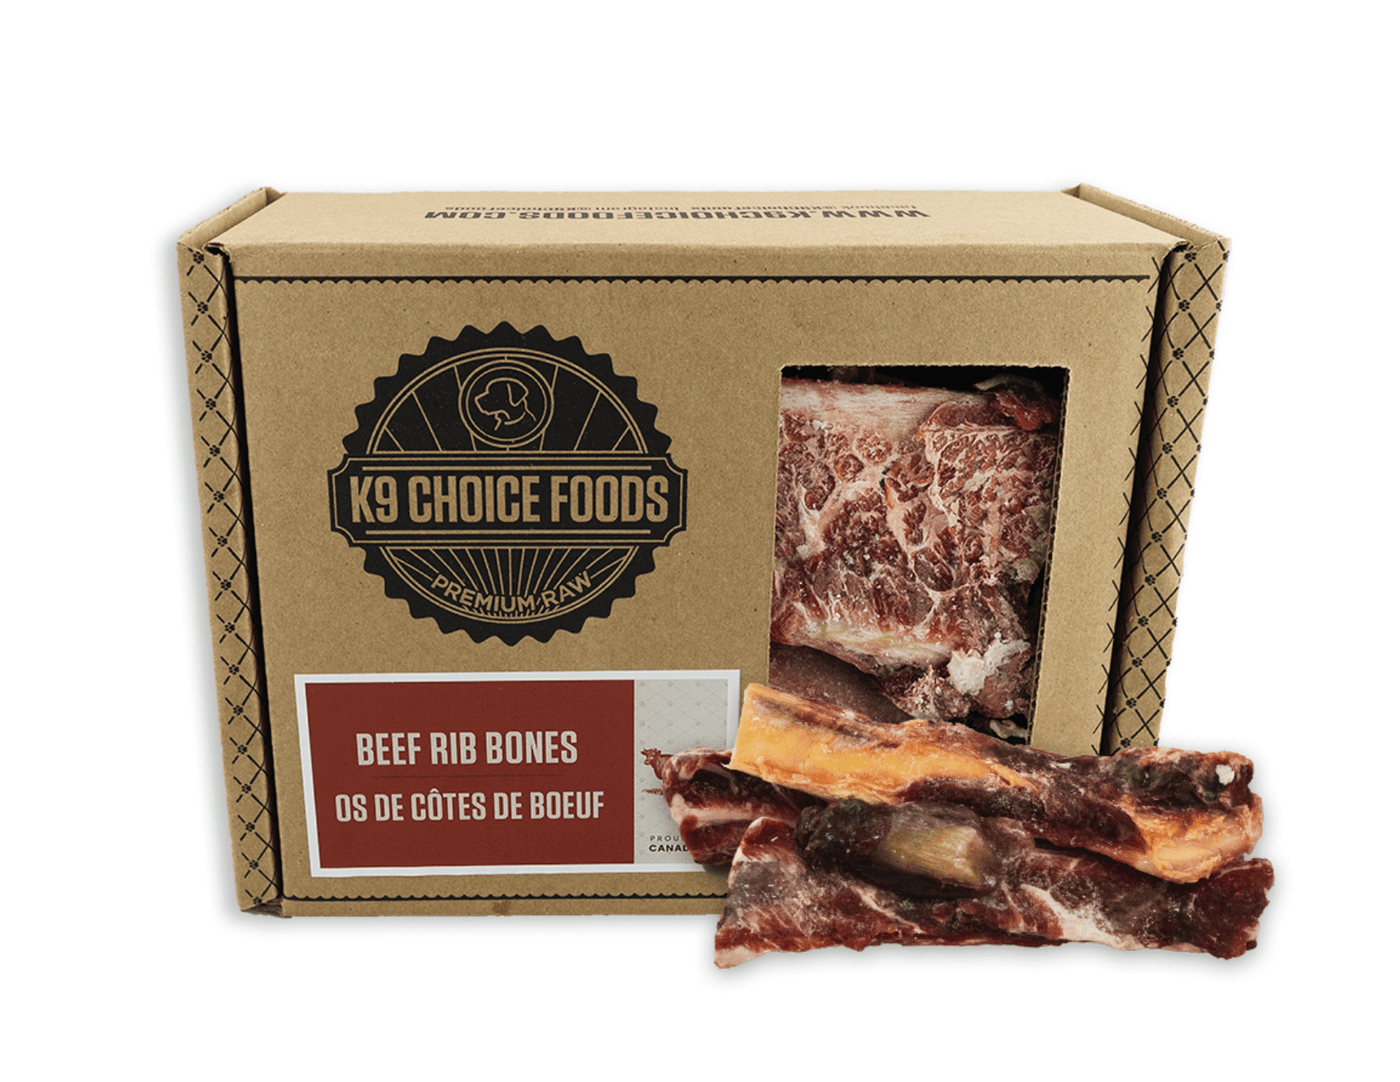 K9 Choice - Beef Rib Bones Box 1.36kg/3lb (min) - Frozen Raw Dog Chew - PetToba-K9 Choice Foods